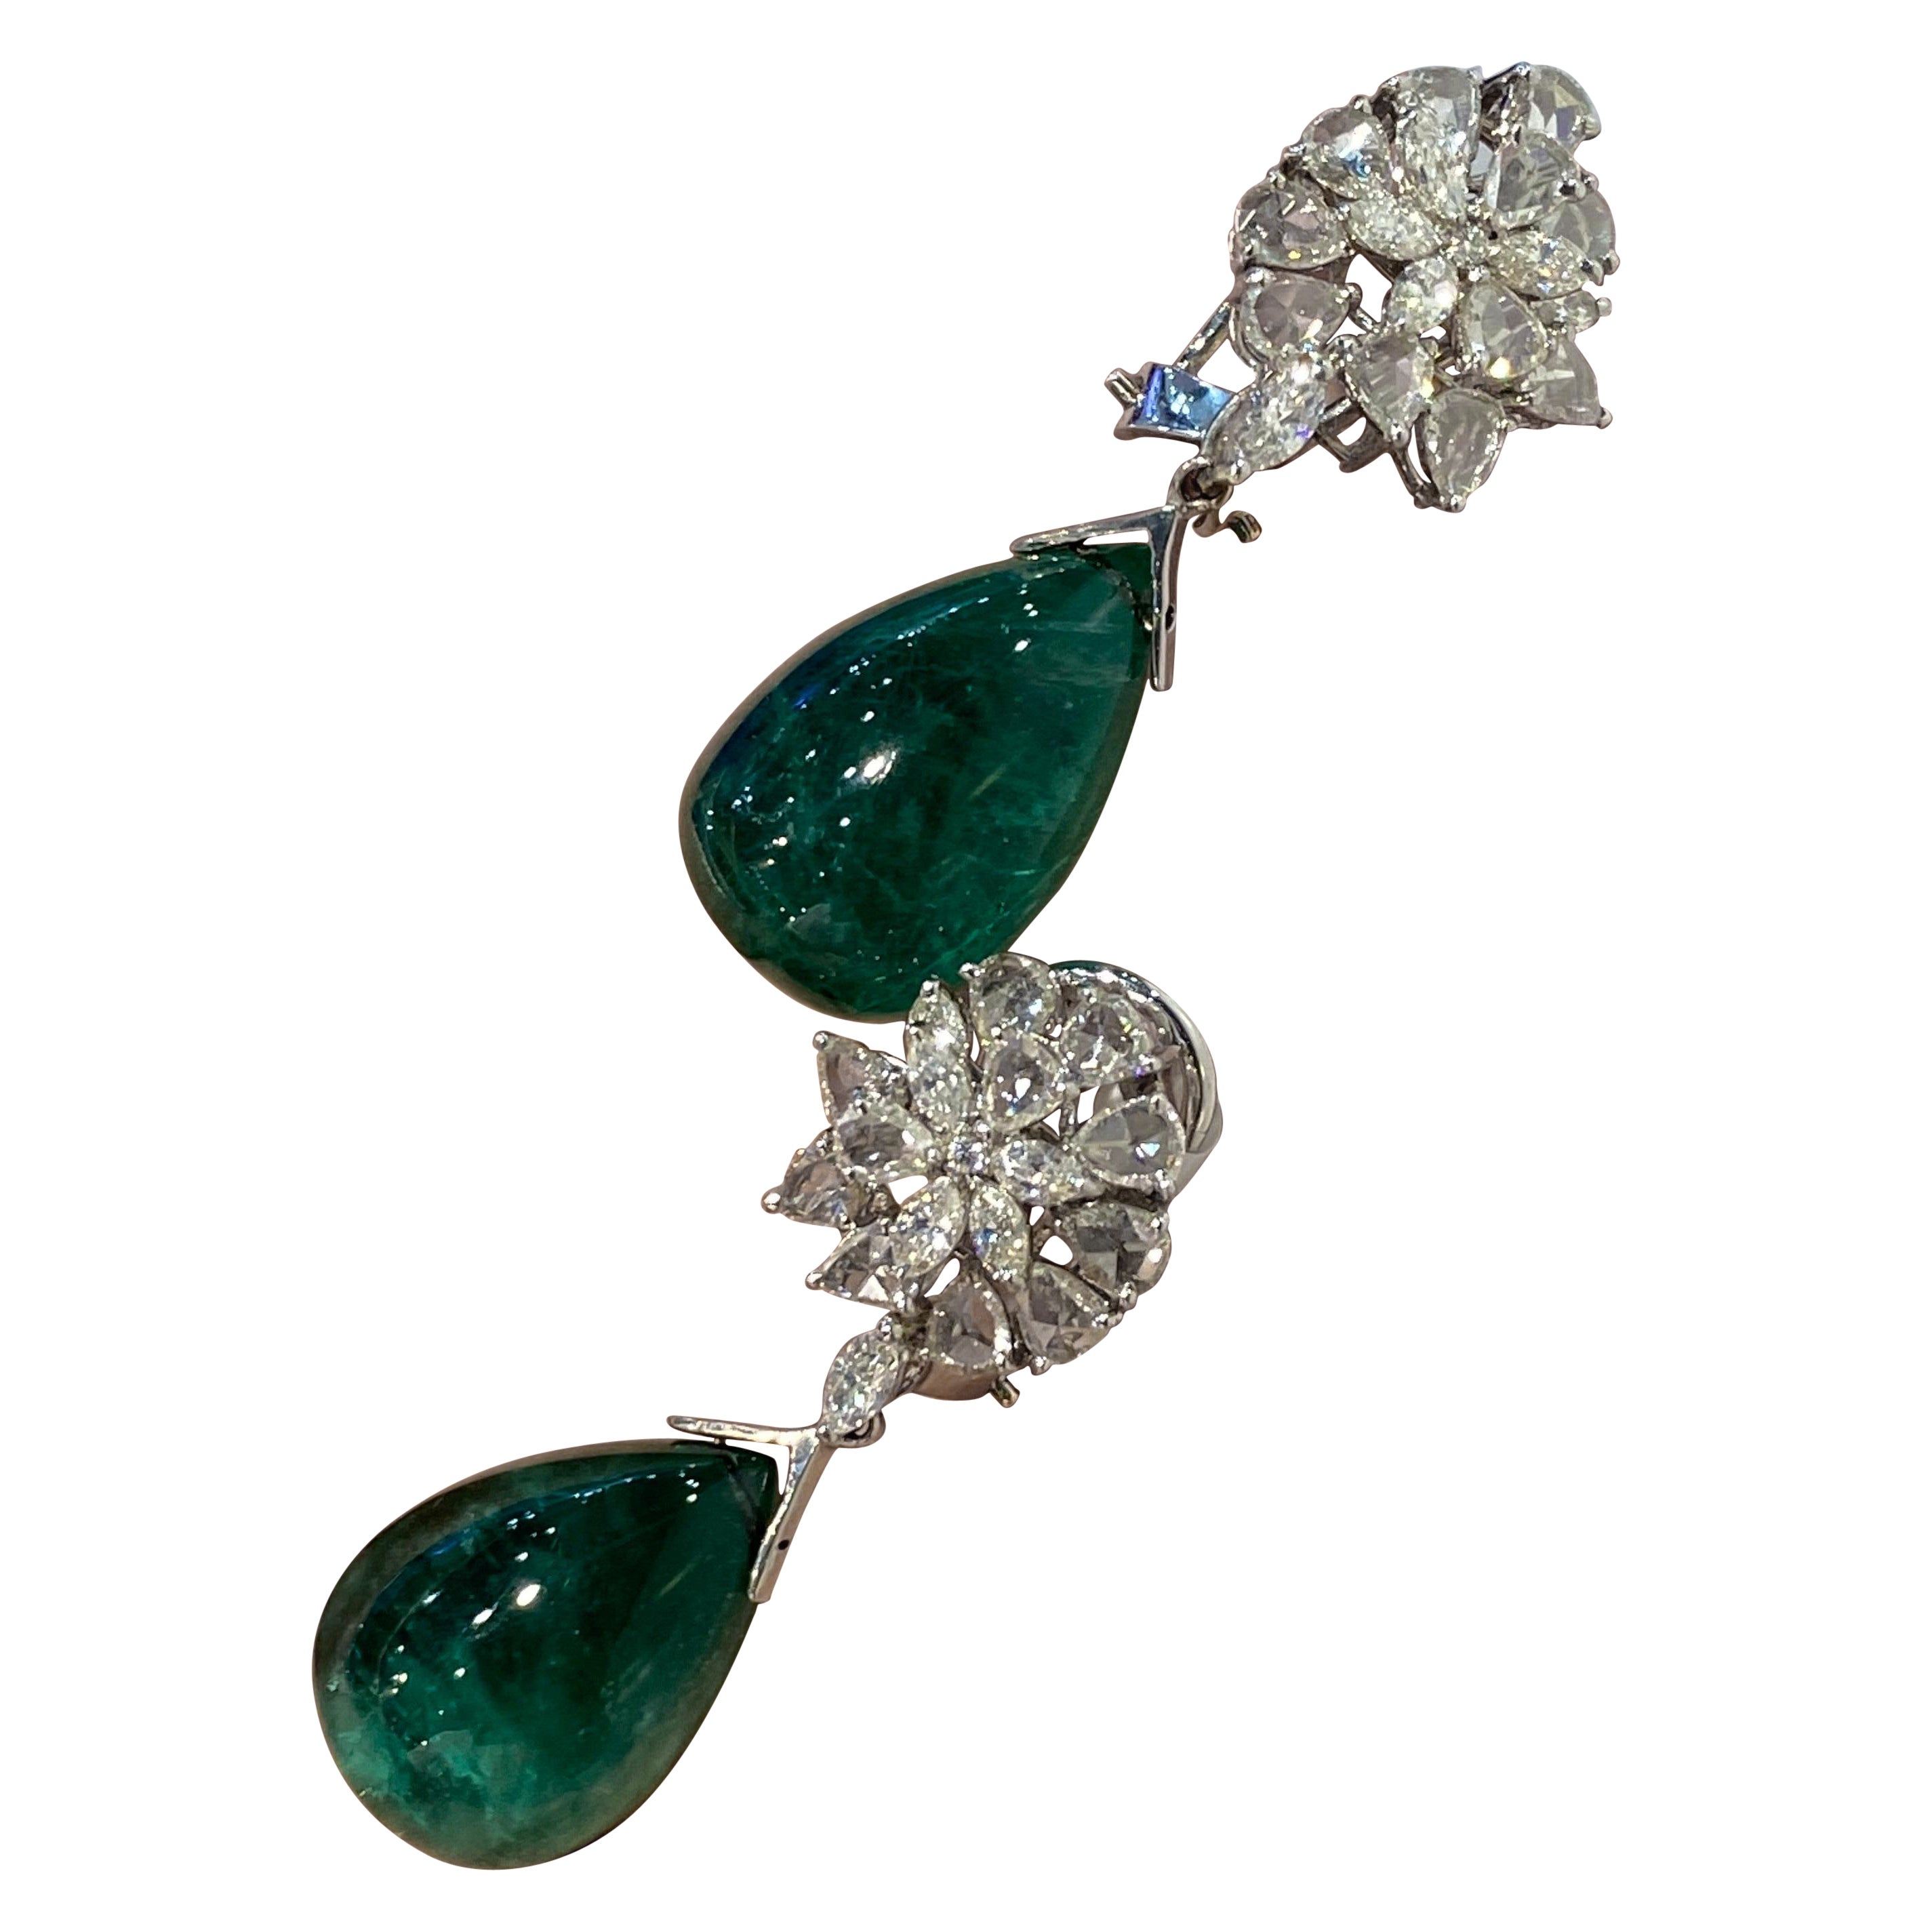 46.1 Carat Emerald Drops Earrings with Diamonds